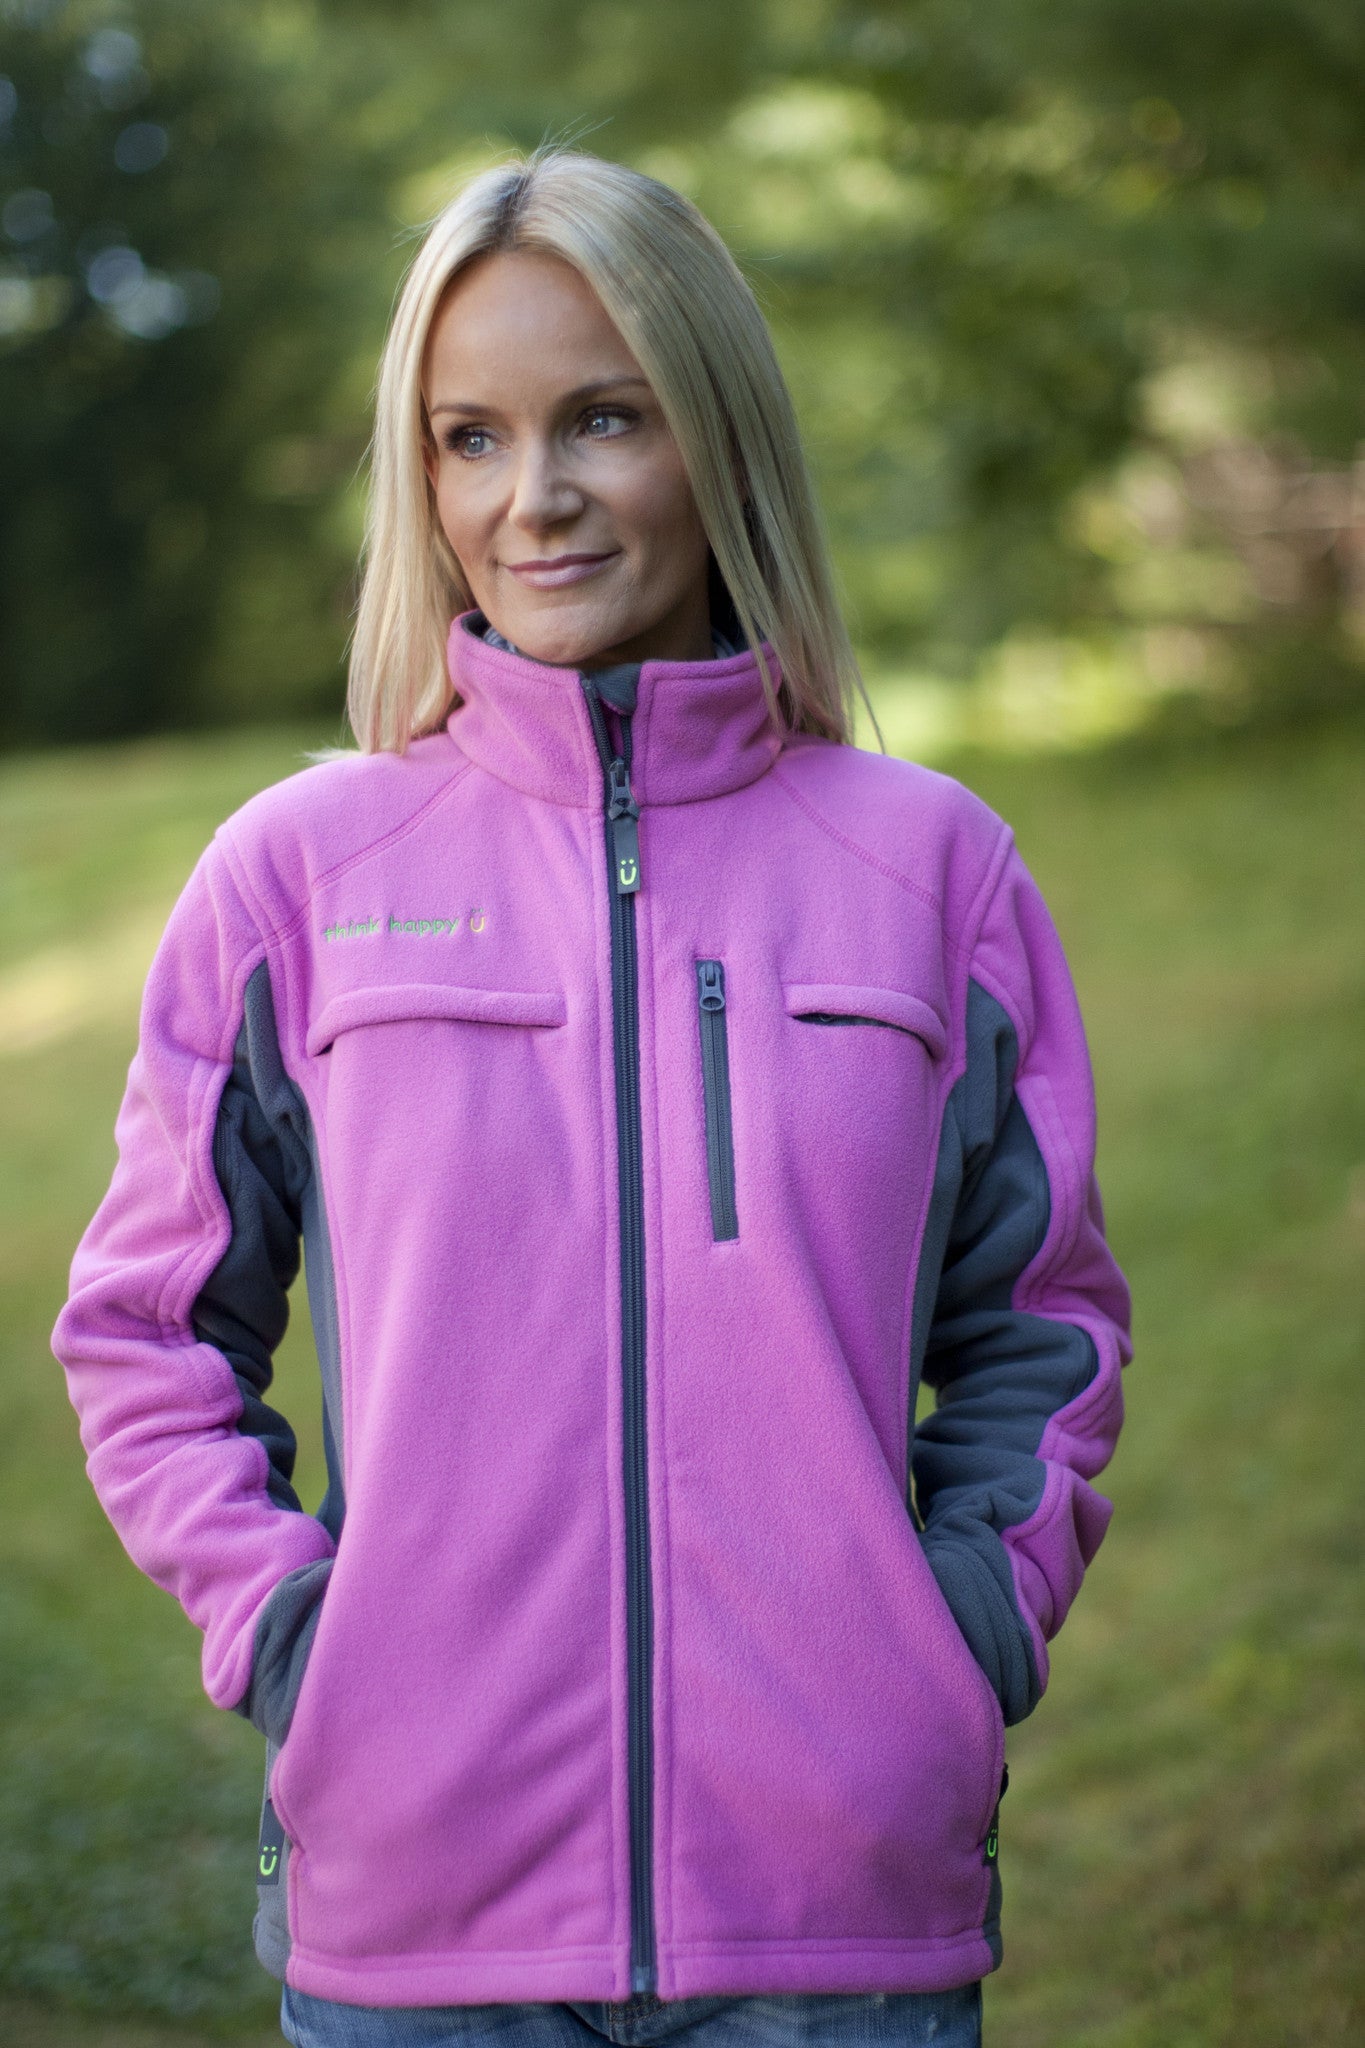 Cancer Awareness Ribbon Ladies Pro Fleece Full-zip Jacket